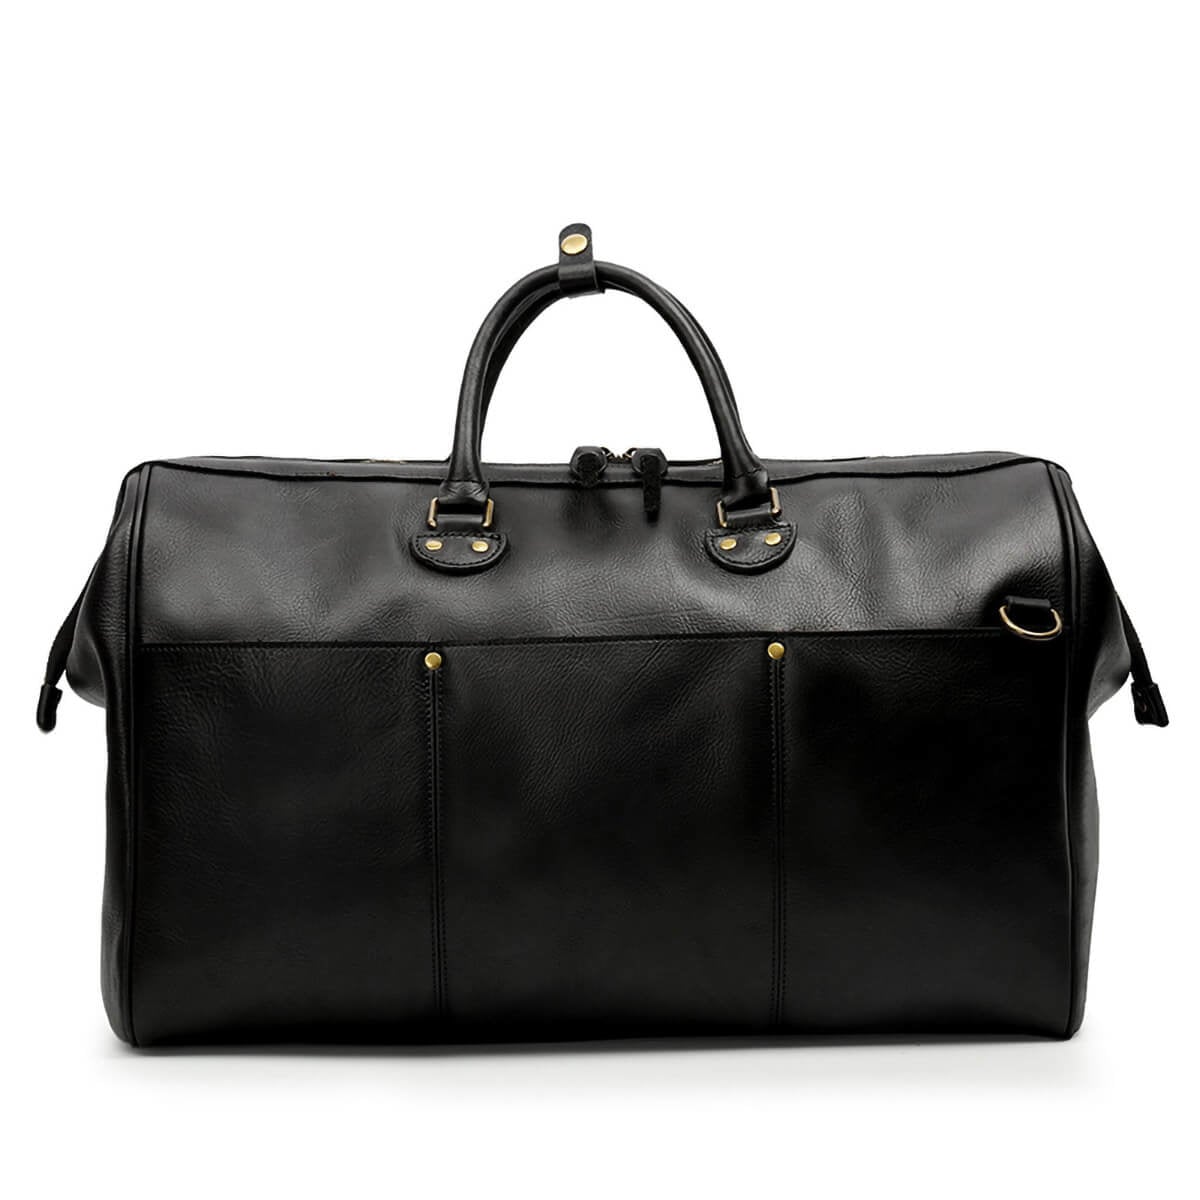 Black leather travel duffle bag 